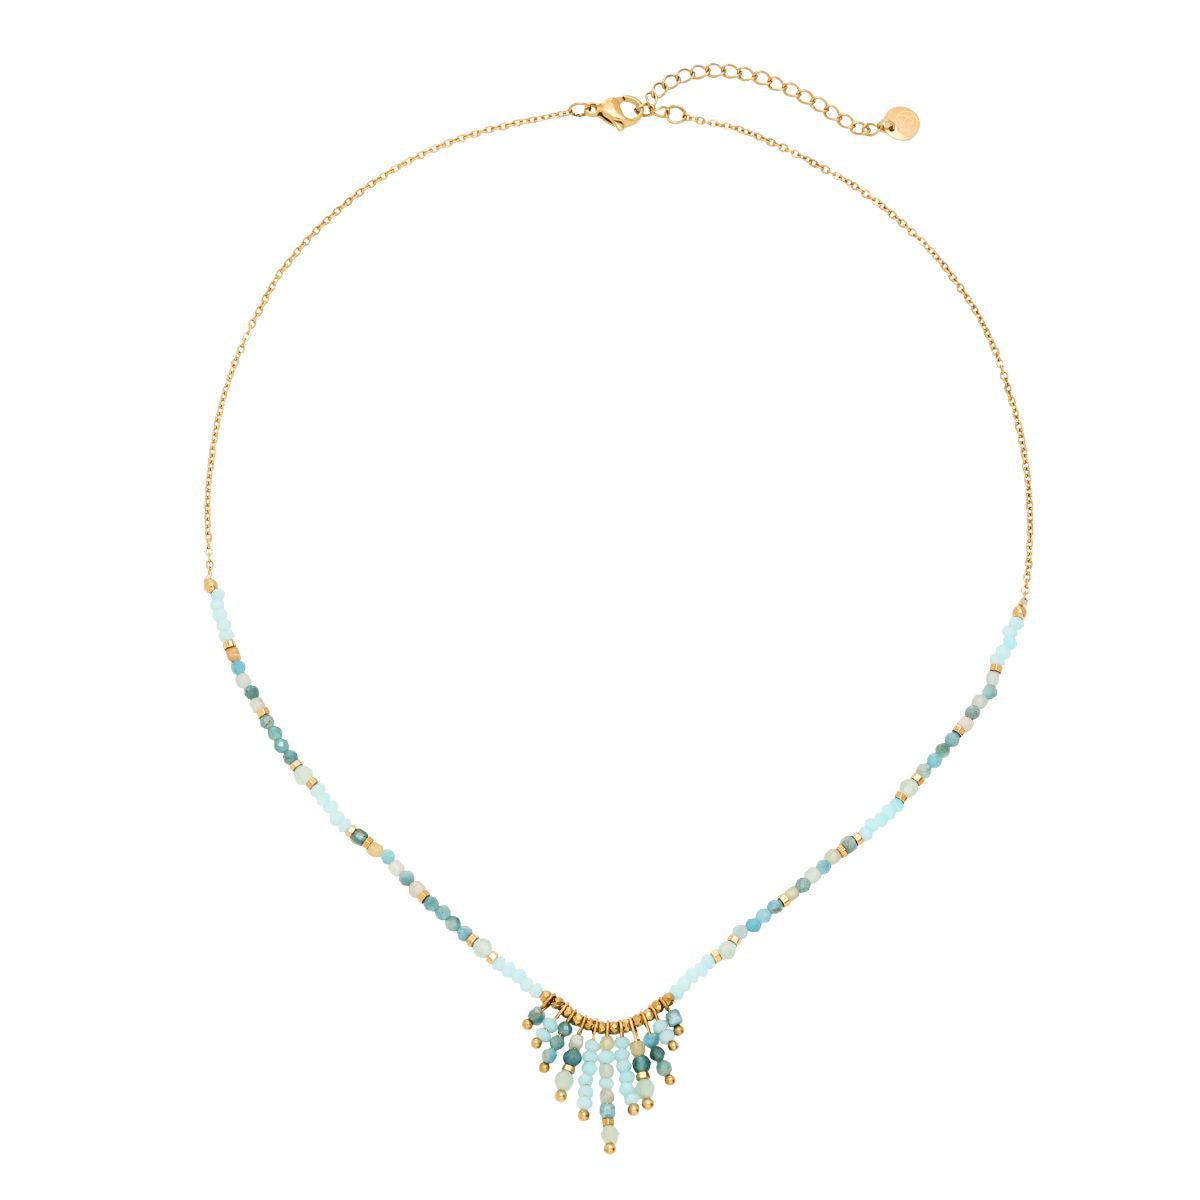 Halskette "Hanging Beads" Edelstahl 14K vergoldet